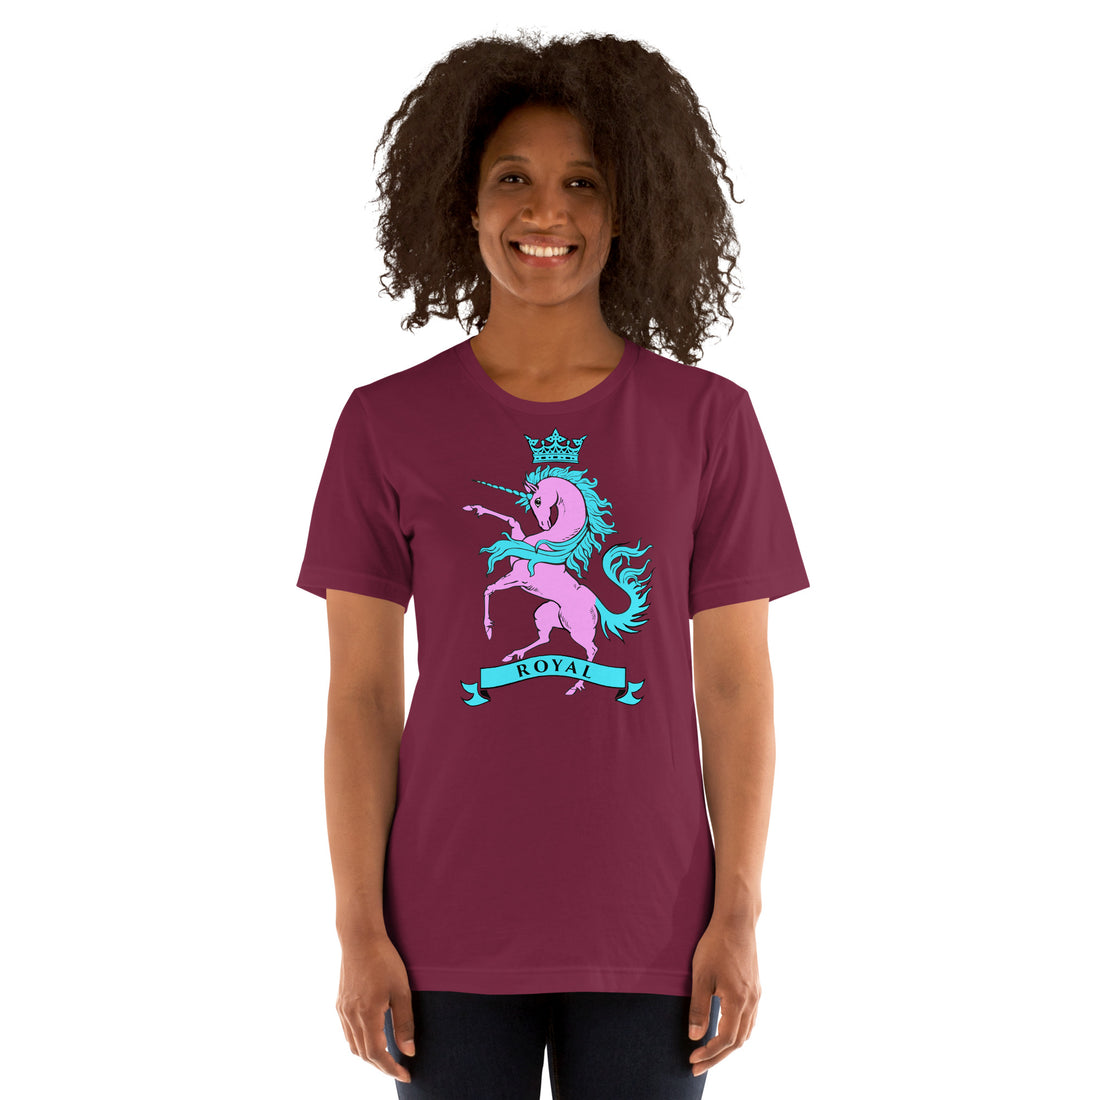 Royal - Unicorn T-Shirt -  affirmation, support, motivational message T-Shirt soft 100% cotton